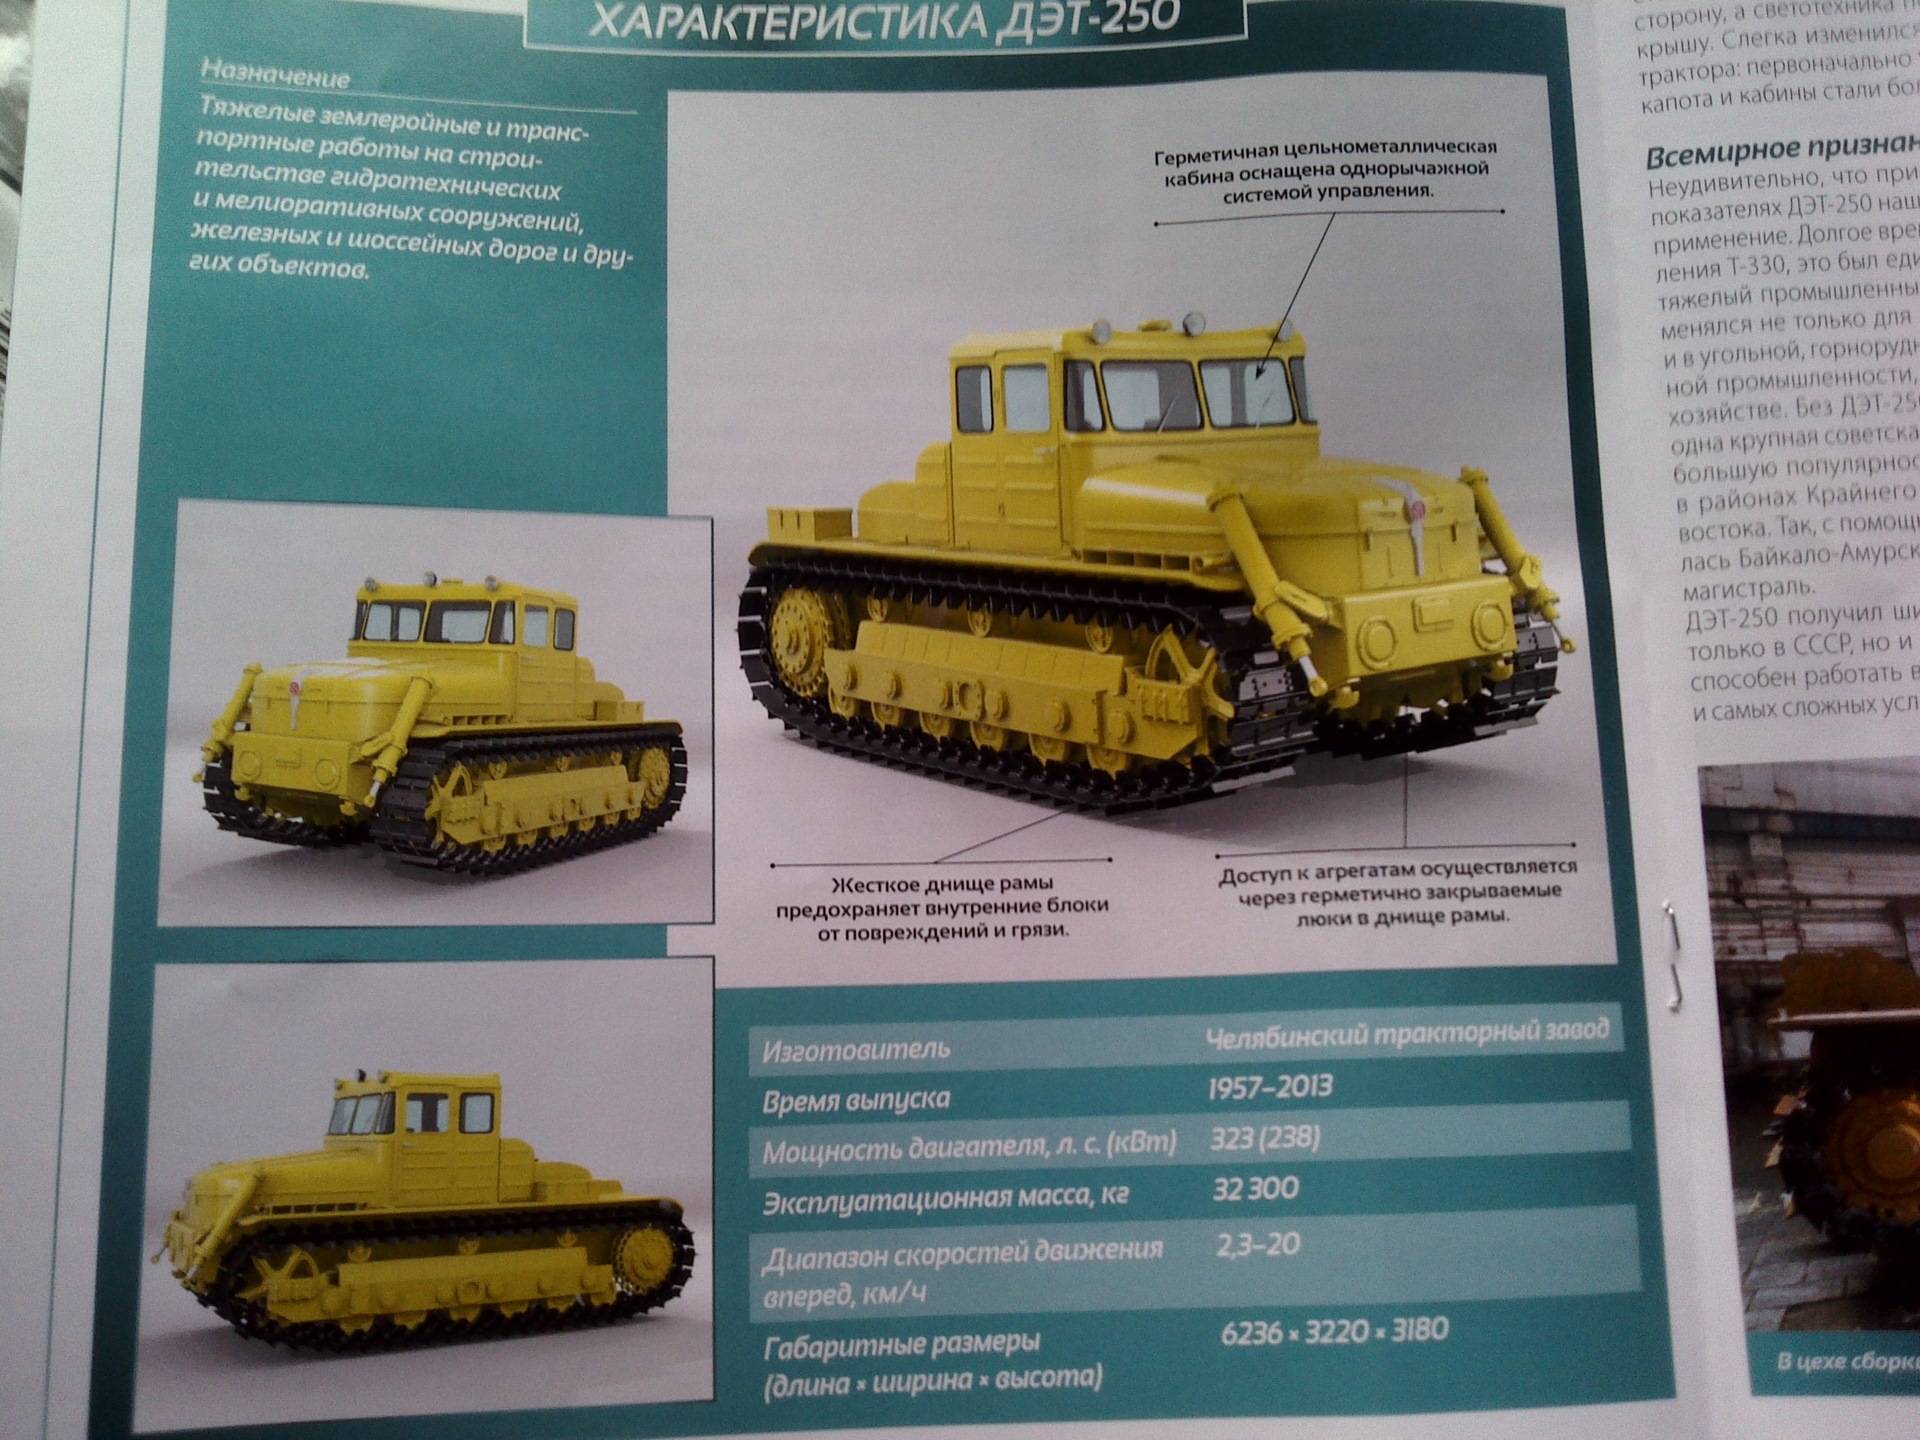 ✅ трактор беларус 320 4 технические характеристики - tractoramtz.ru